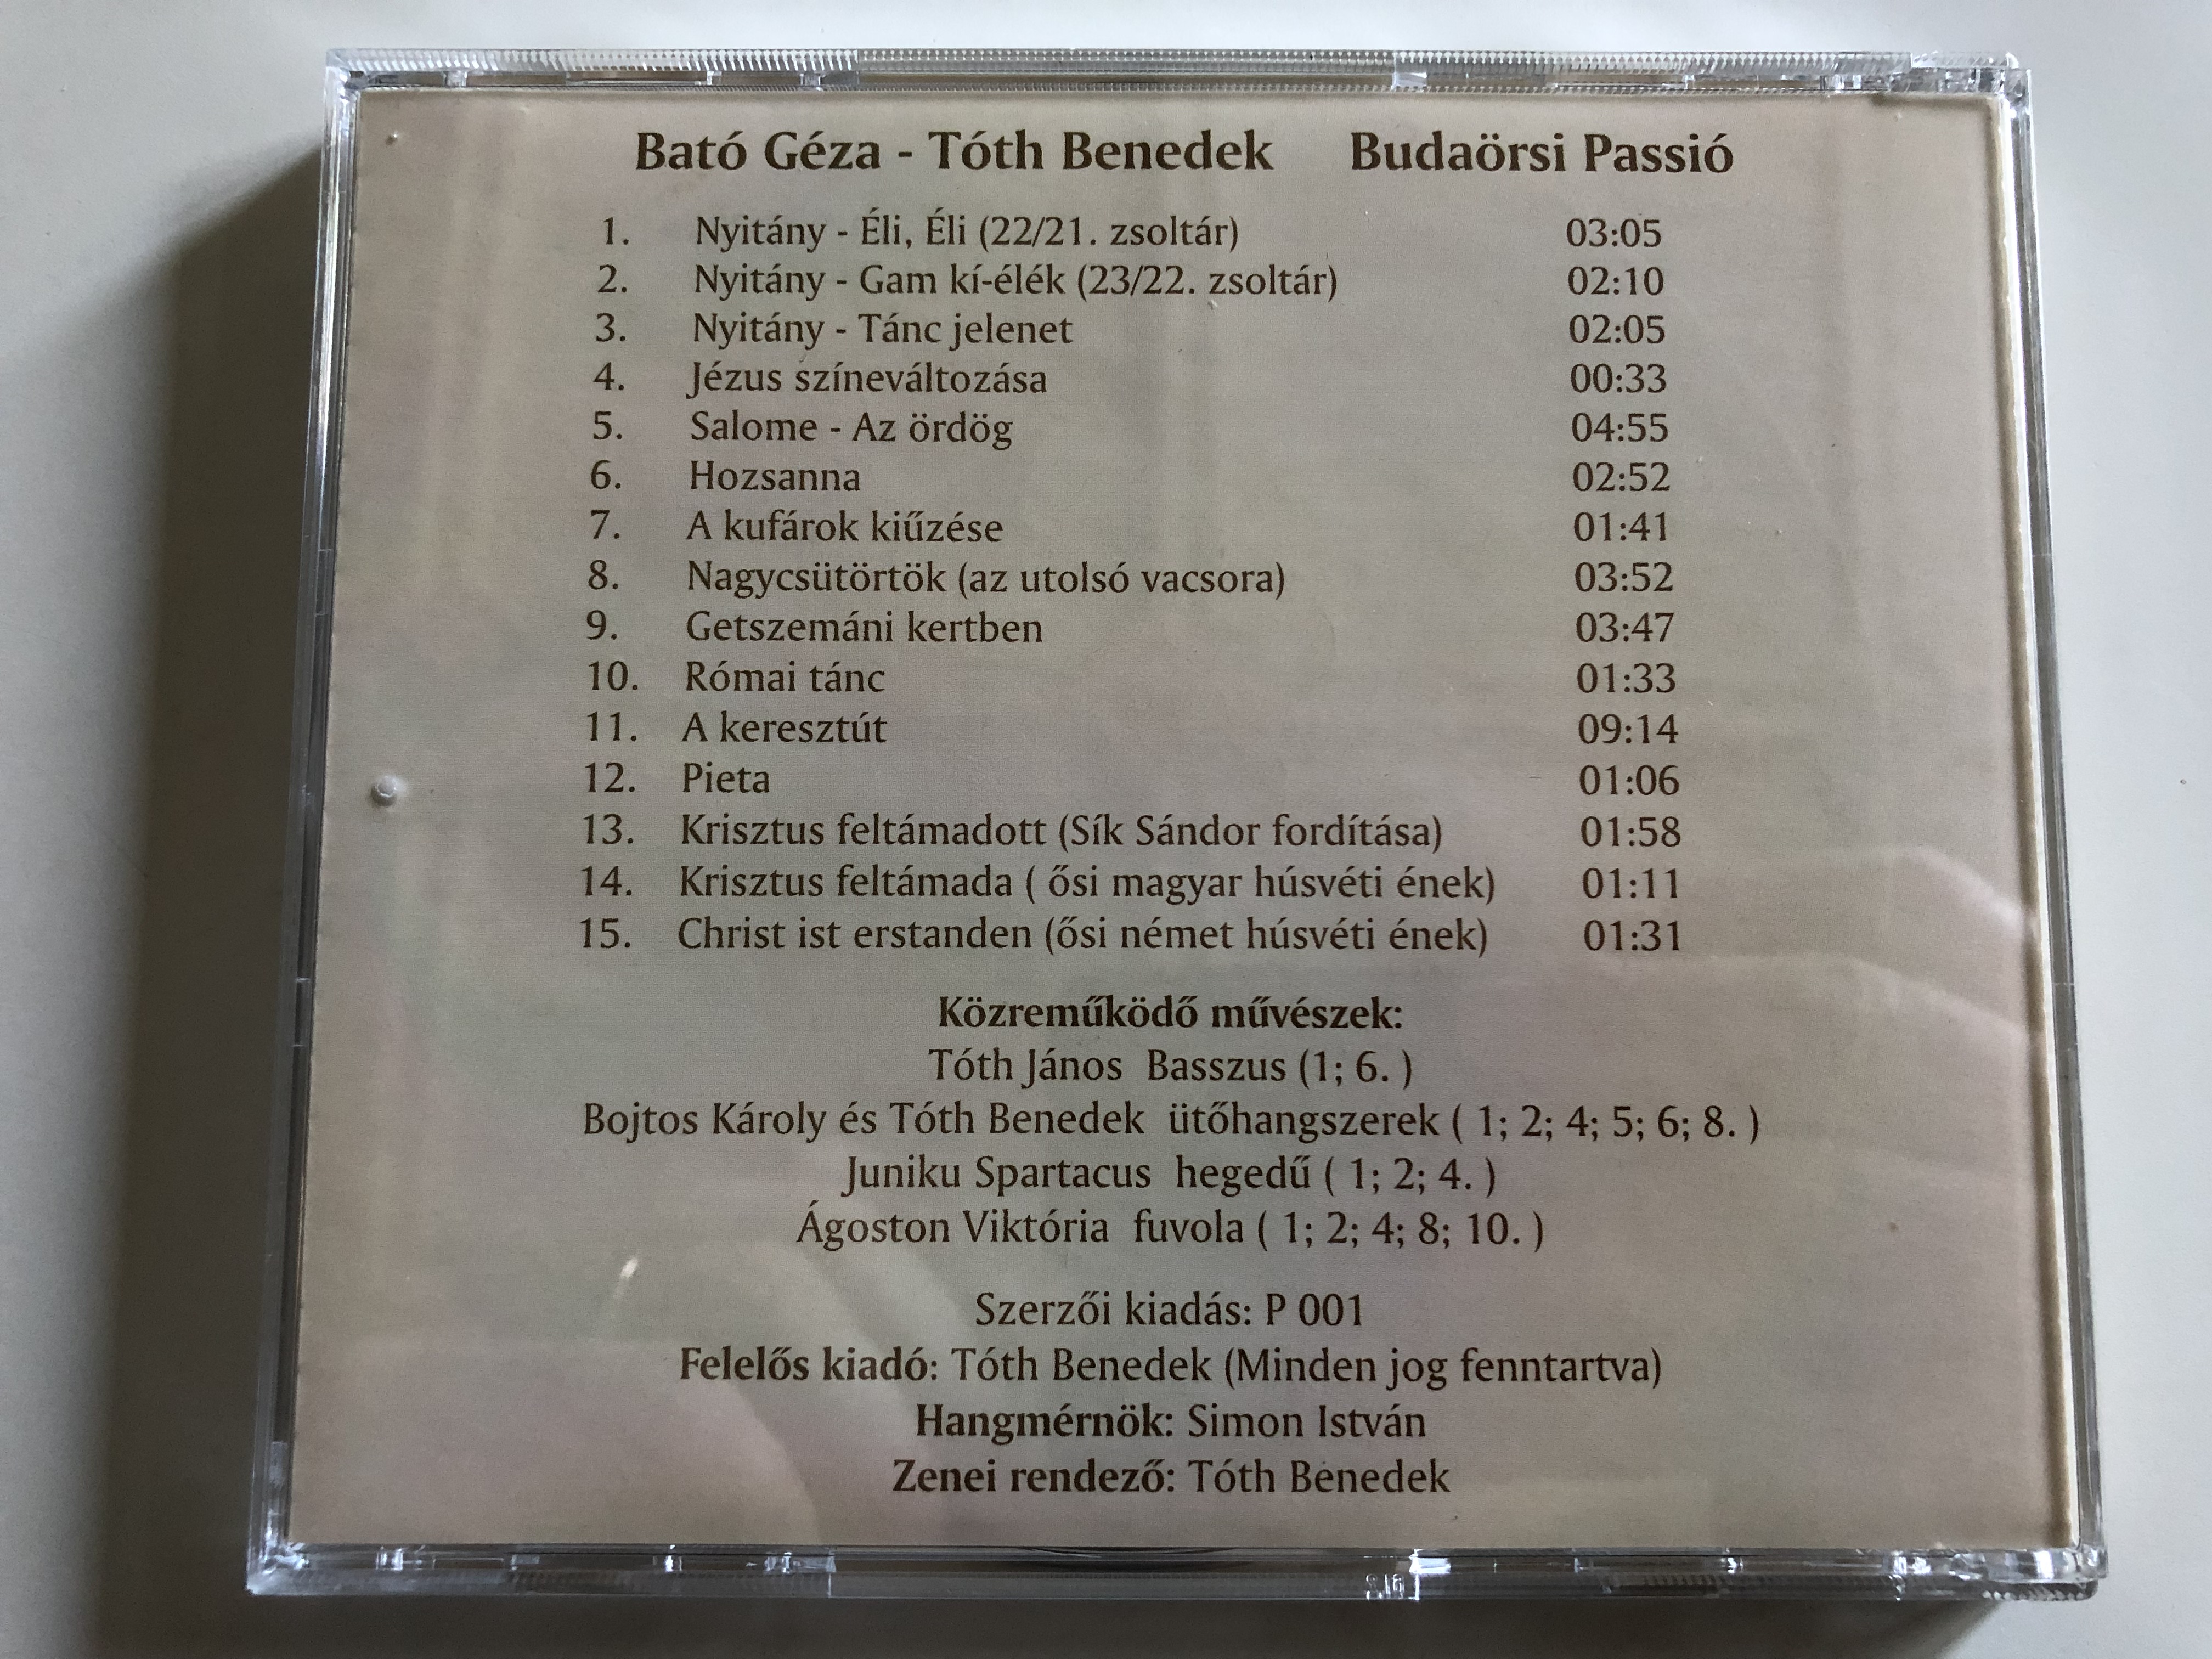 bato-geza-toth-benedek-budaorsi-budaorser-passio-passion-conducted-toth-benedek-szerzoi-kiadas-audio-cd-p-001-4-.jpg